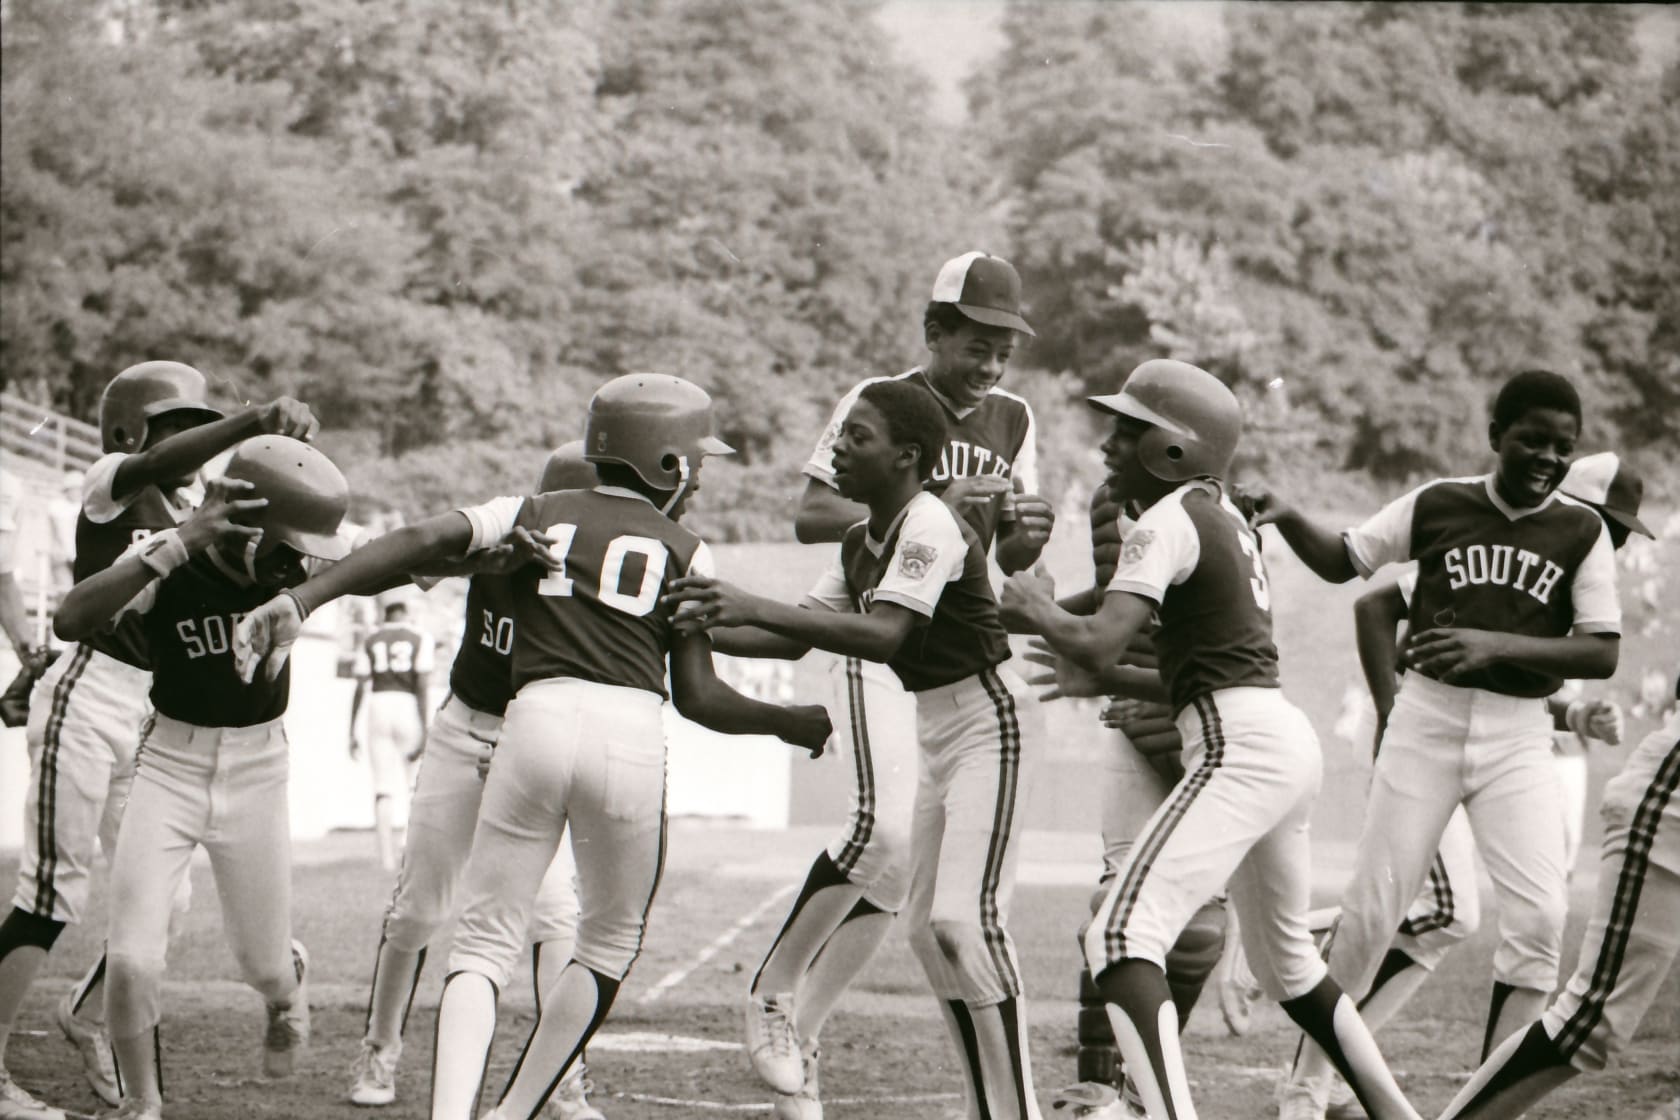 1981 Belmont Heights Little League